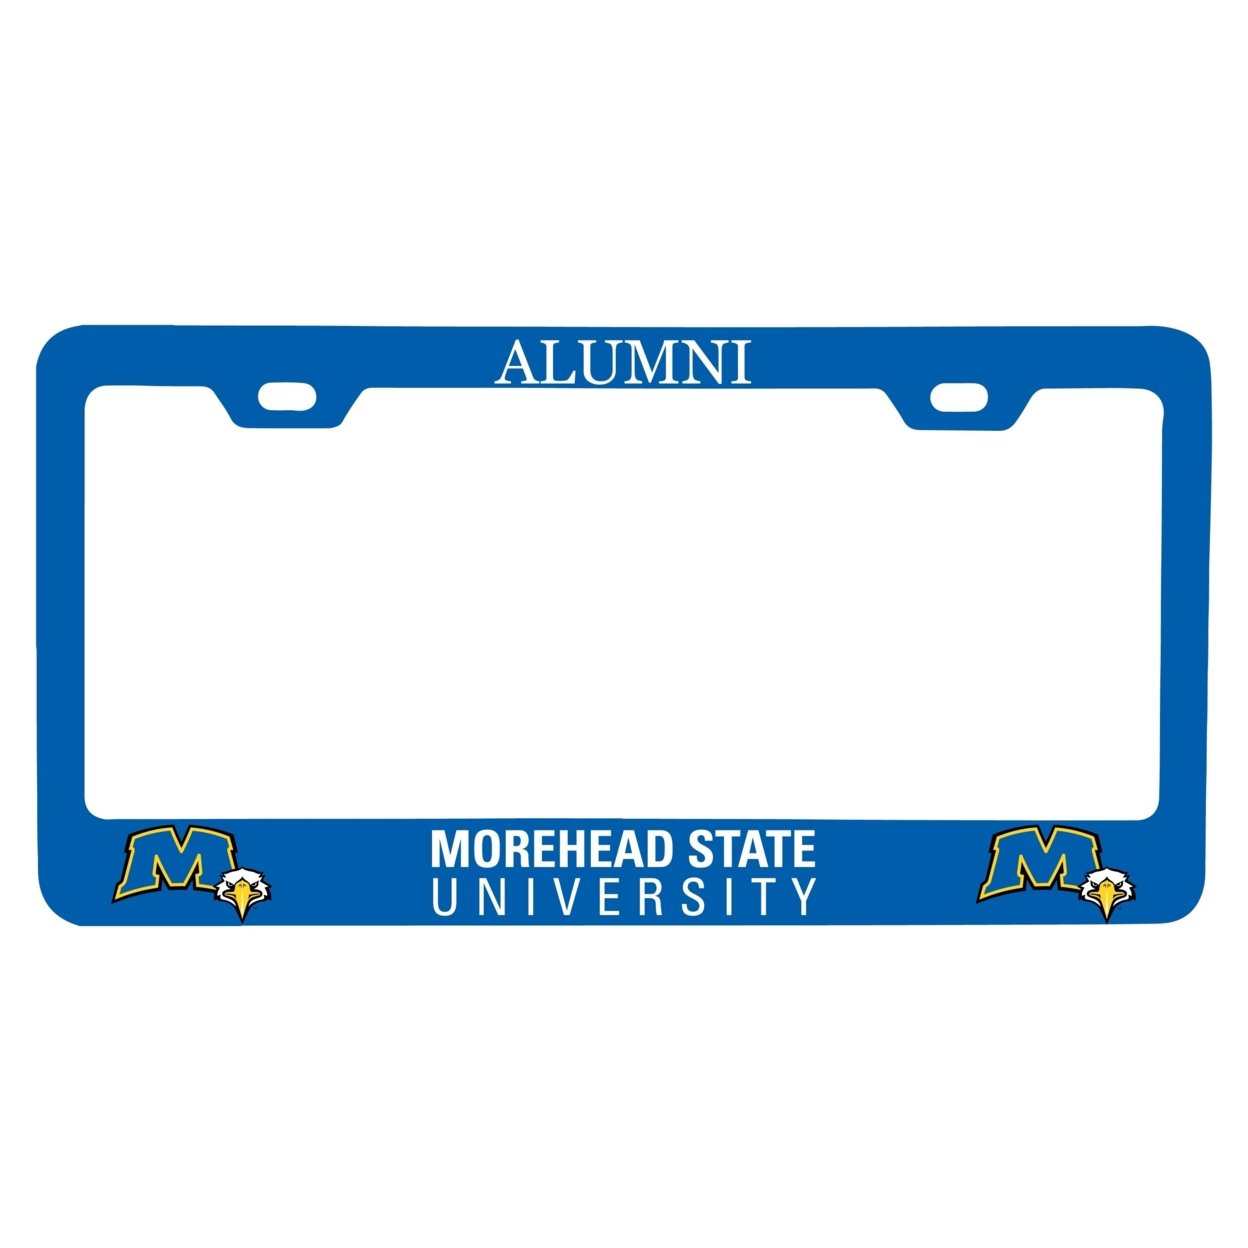 Morehead State University Alumni License Plate Frame